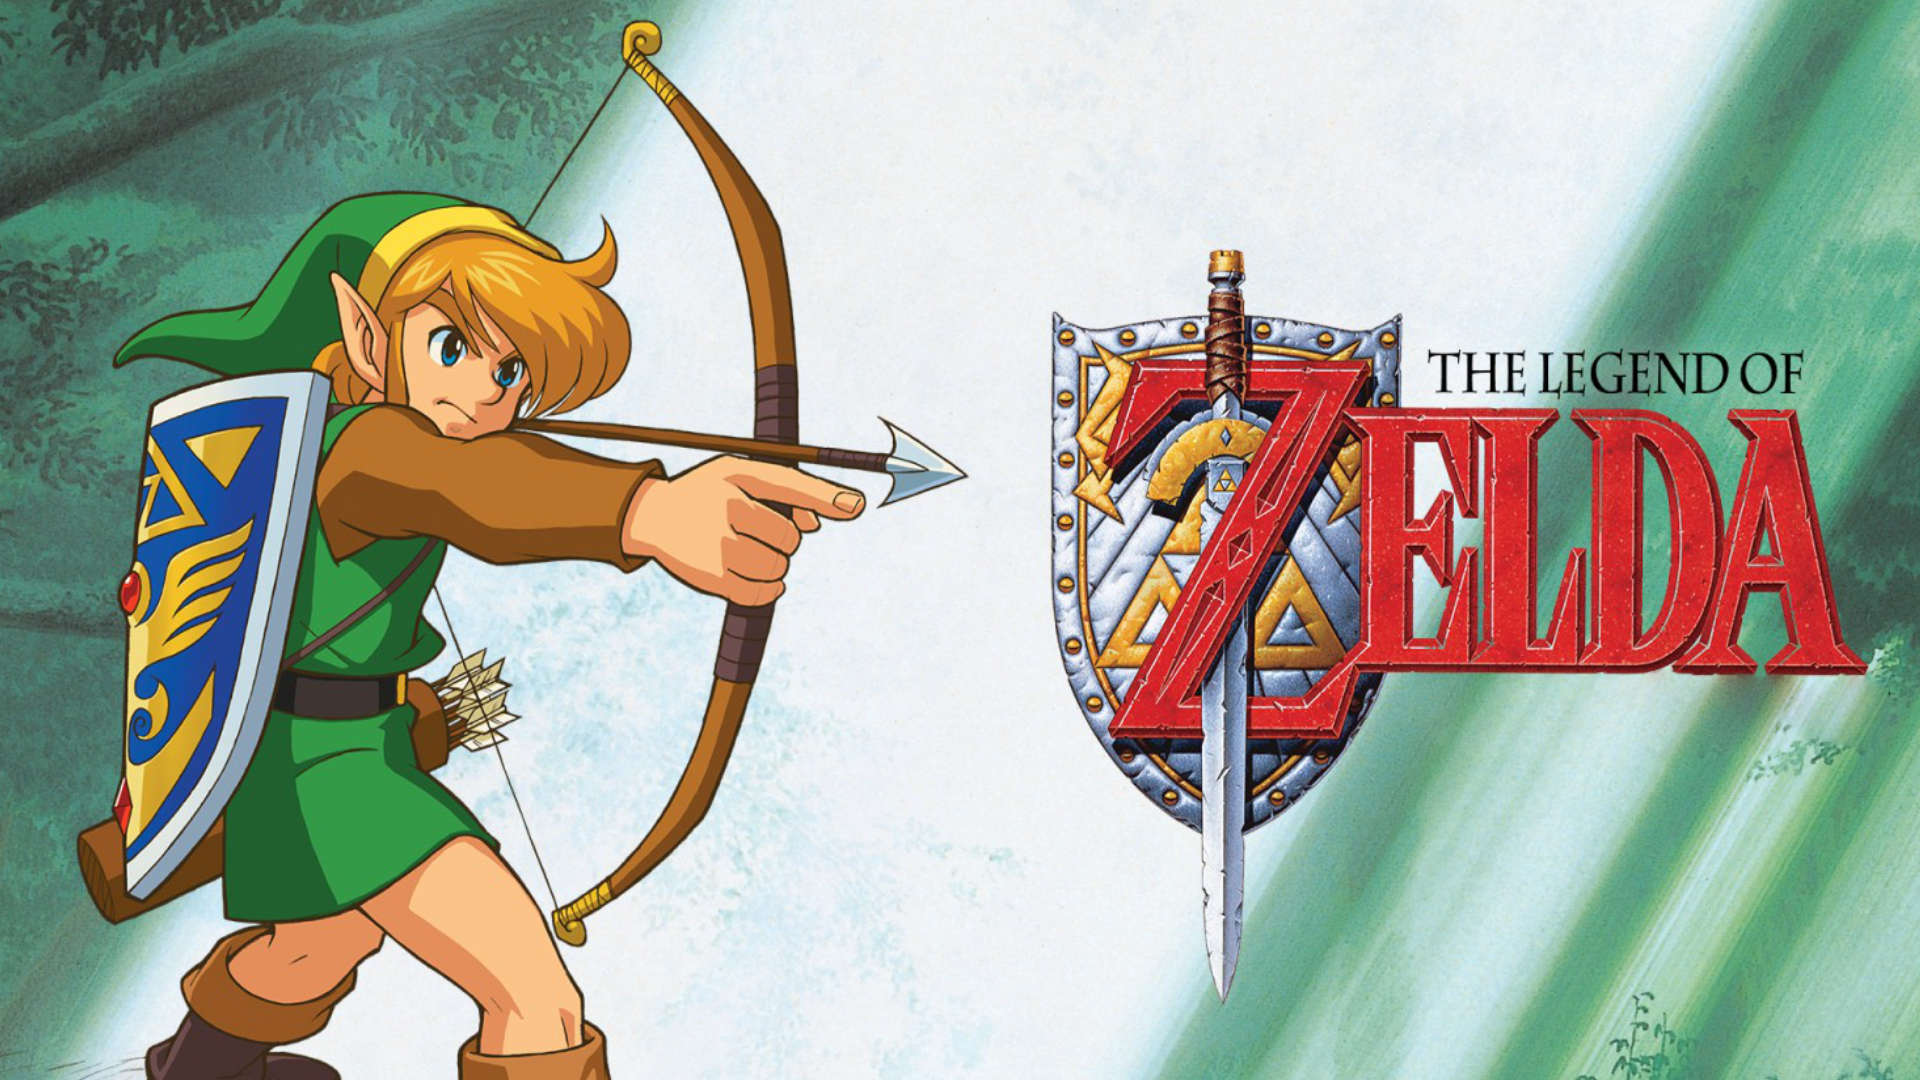 The Legend of Zelda: Fan erweckt Artwork zum Leben